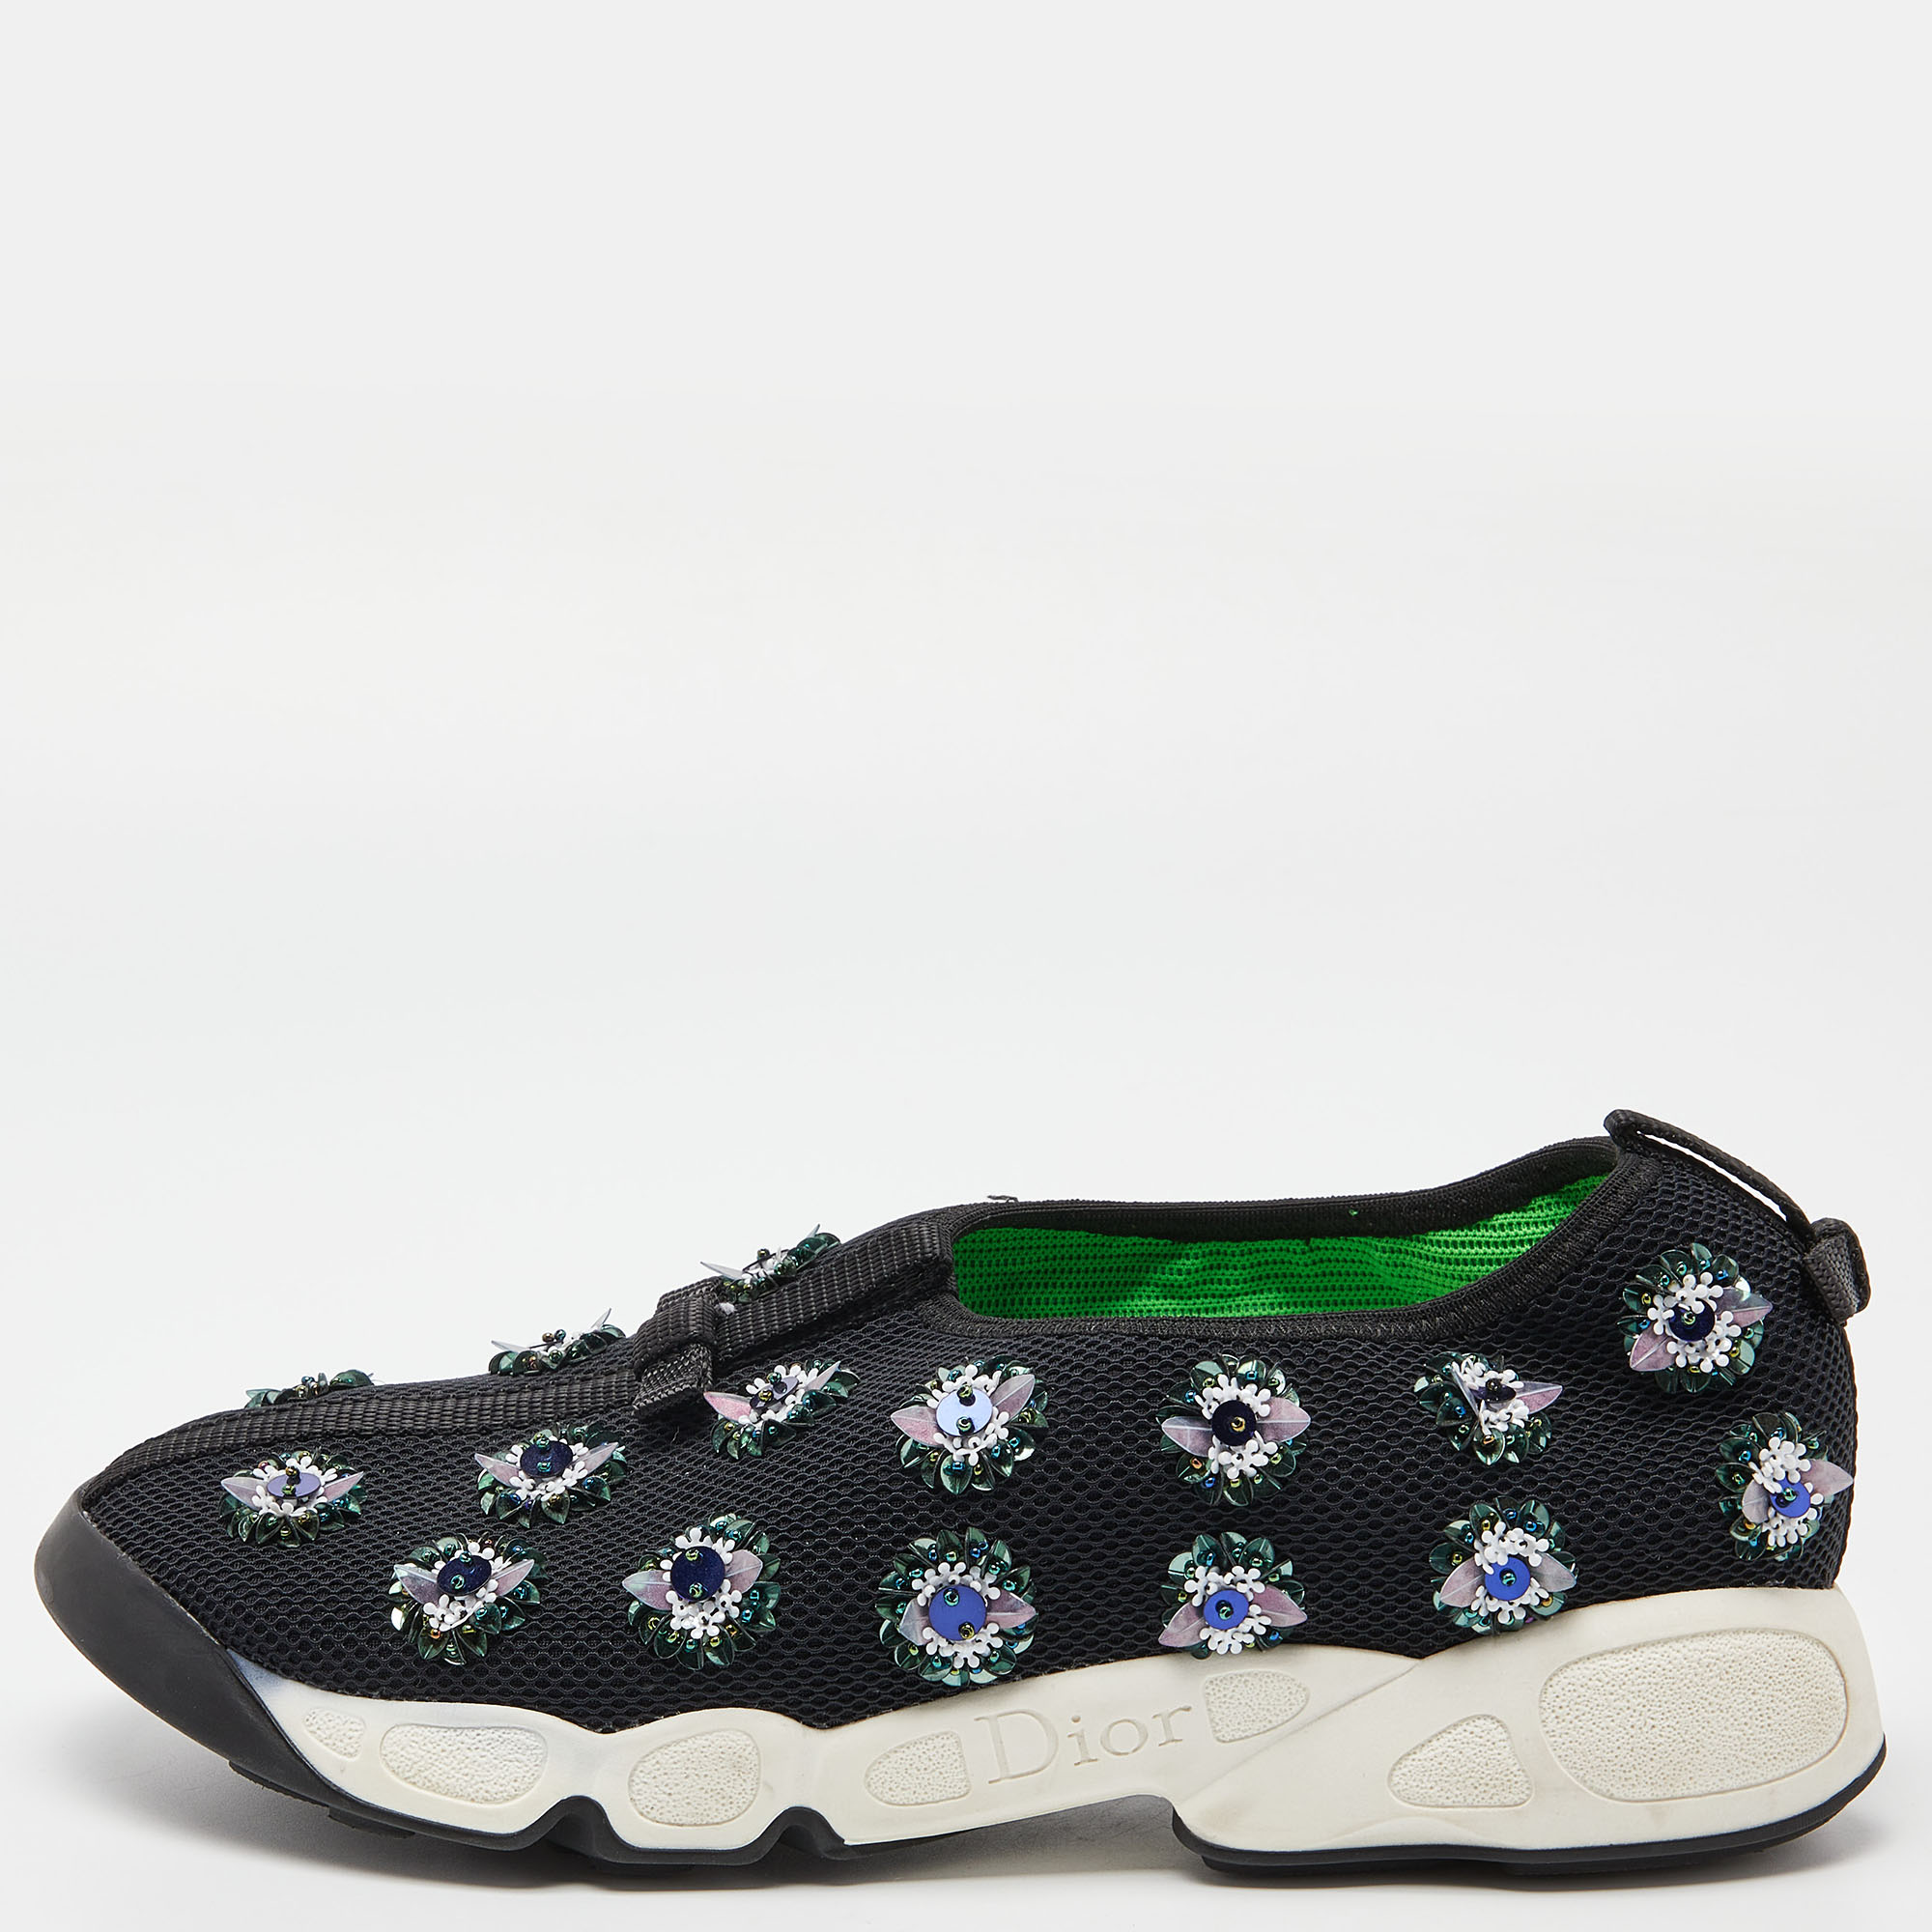 Dior Black Mesh Fusion Floral Embellished Slip On Sneakers Size 39.5